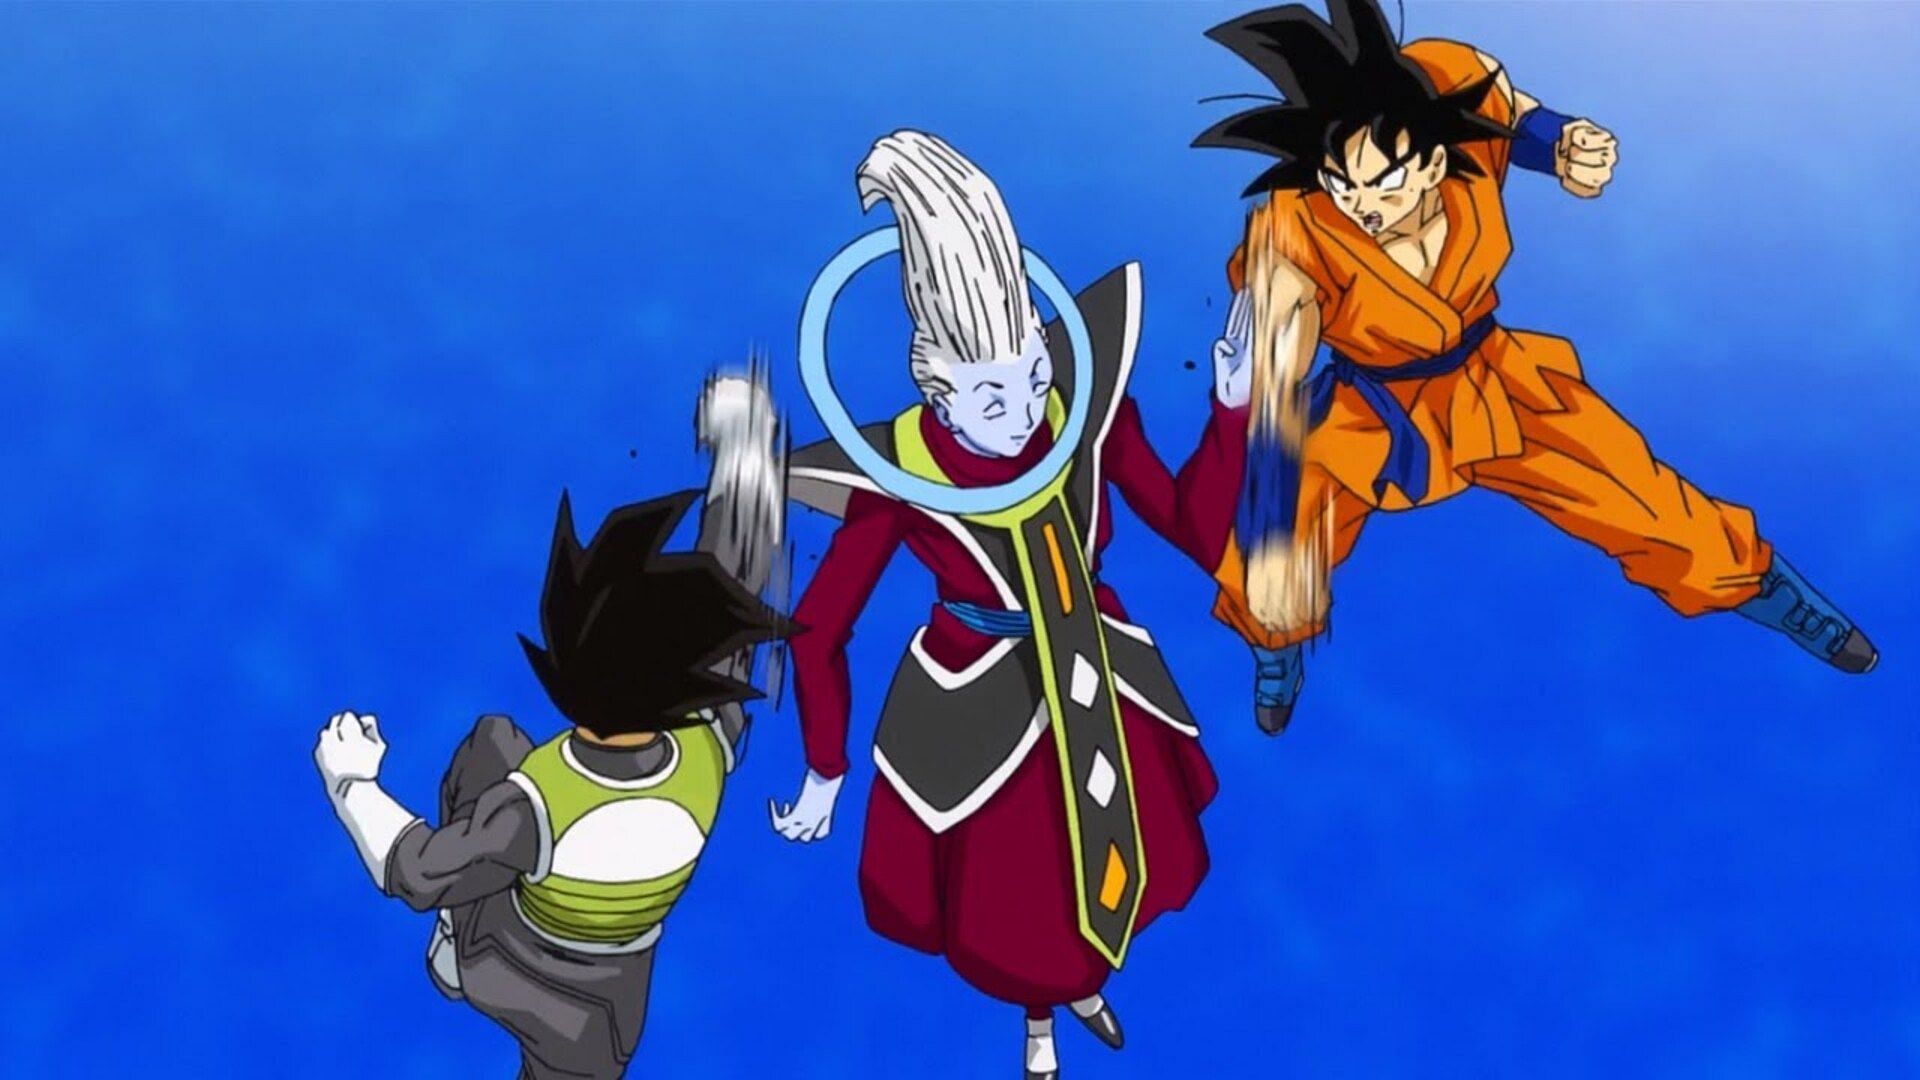 Goku and Vegeta training with the angel Whis (image via Toei Animation)